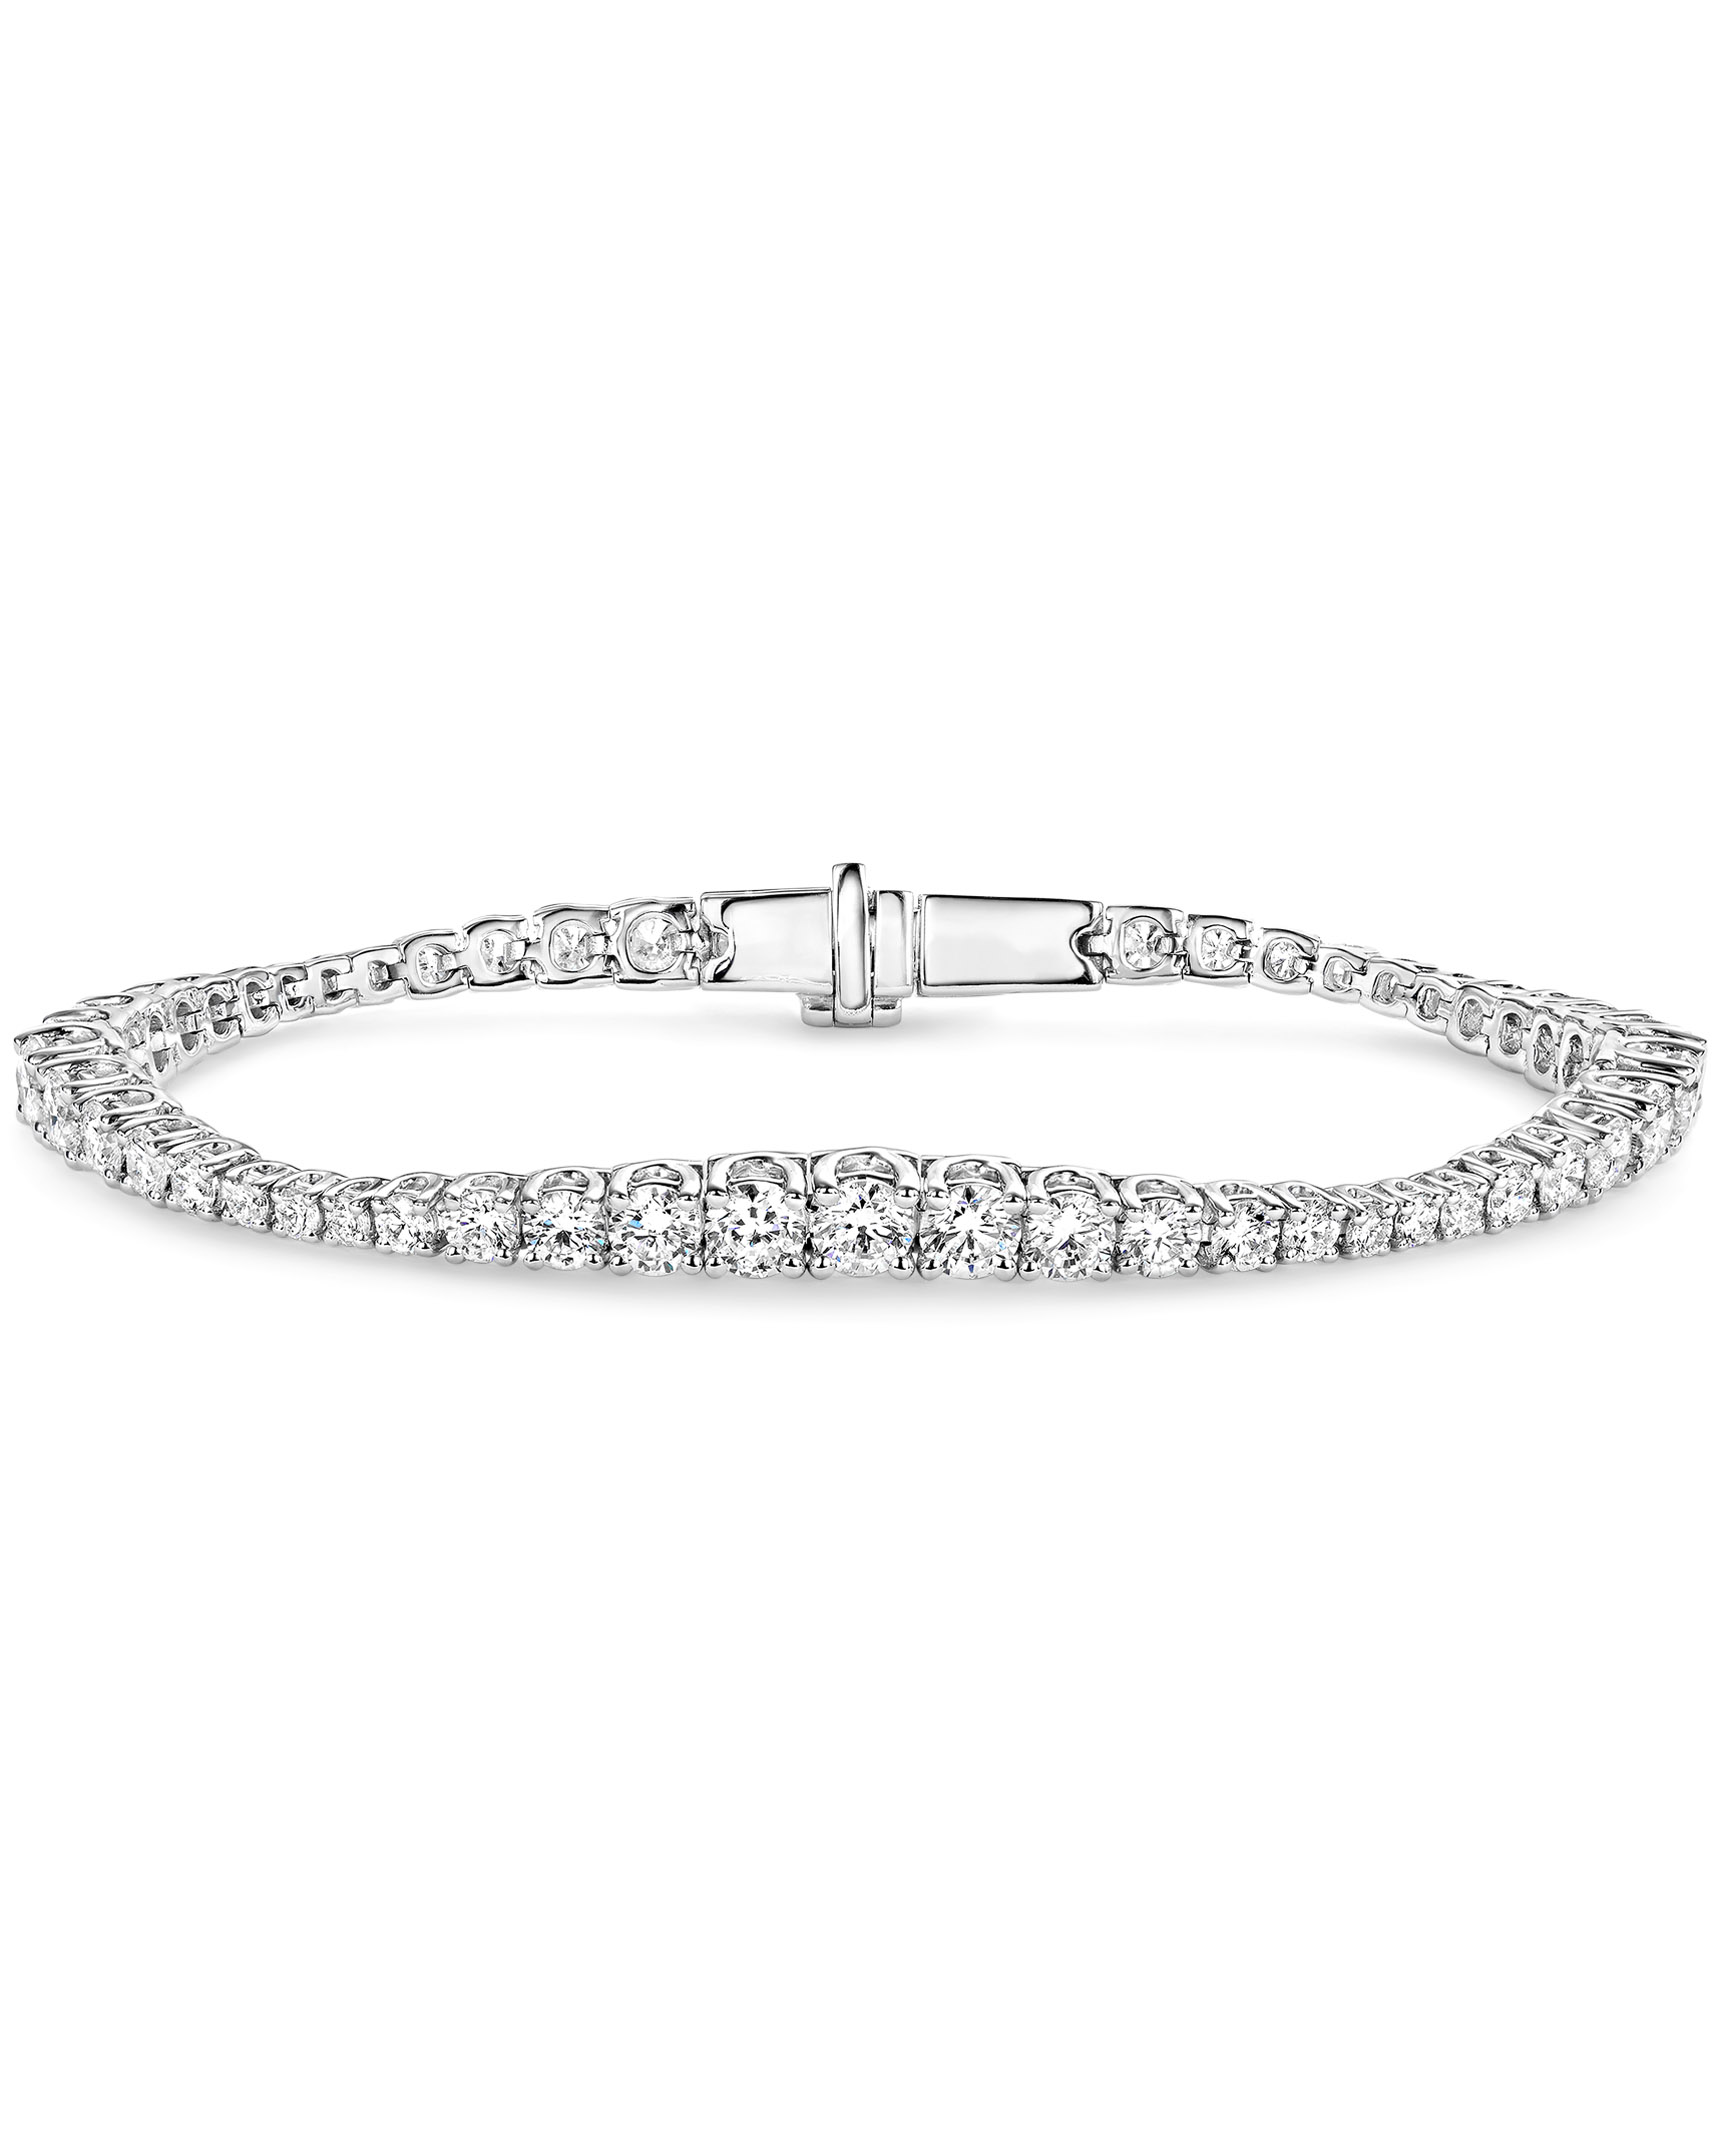 Womens Channel Set Diamond Bangle Bracelet 14K White Gold 0.52 ct